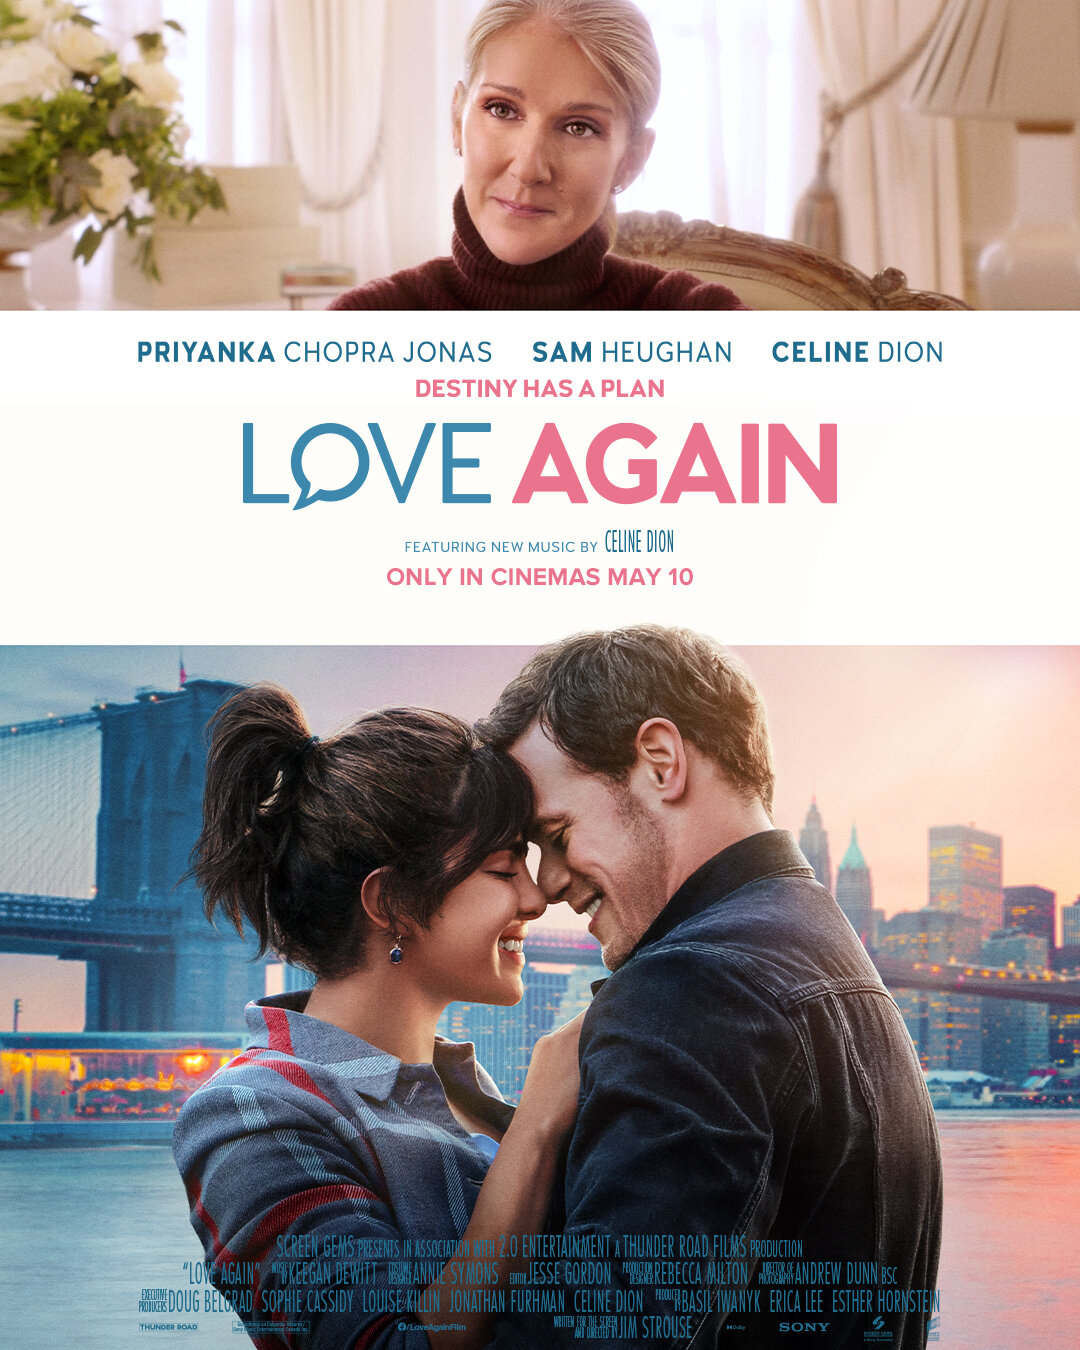 Love Again - Key Art